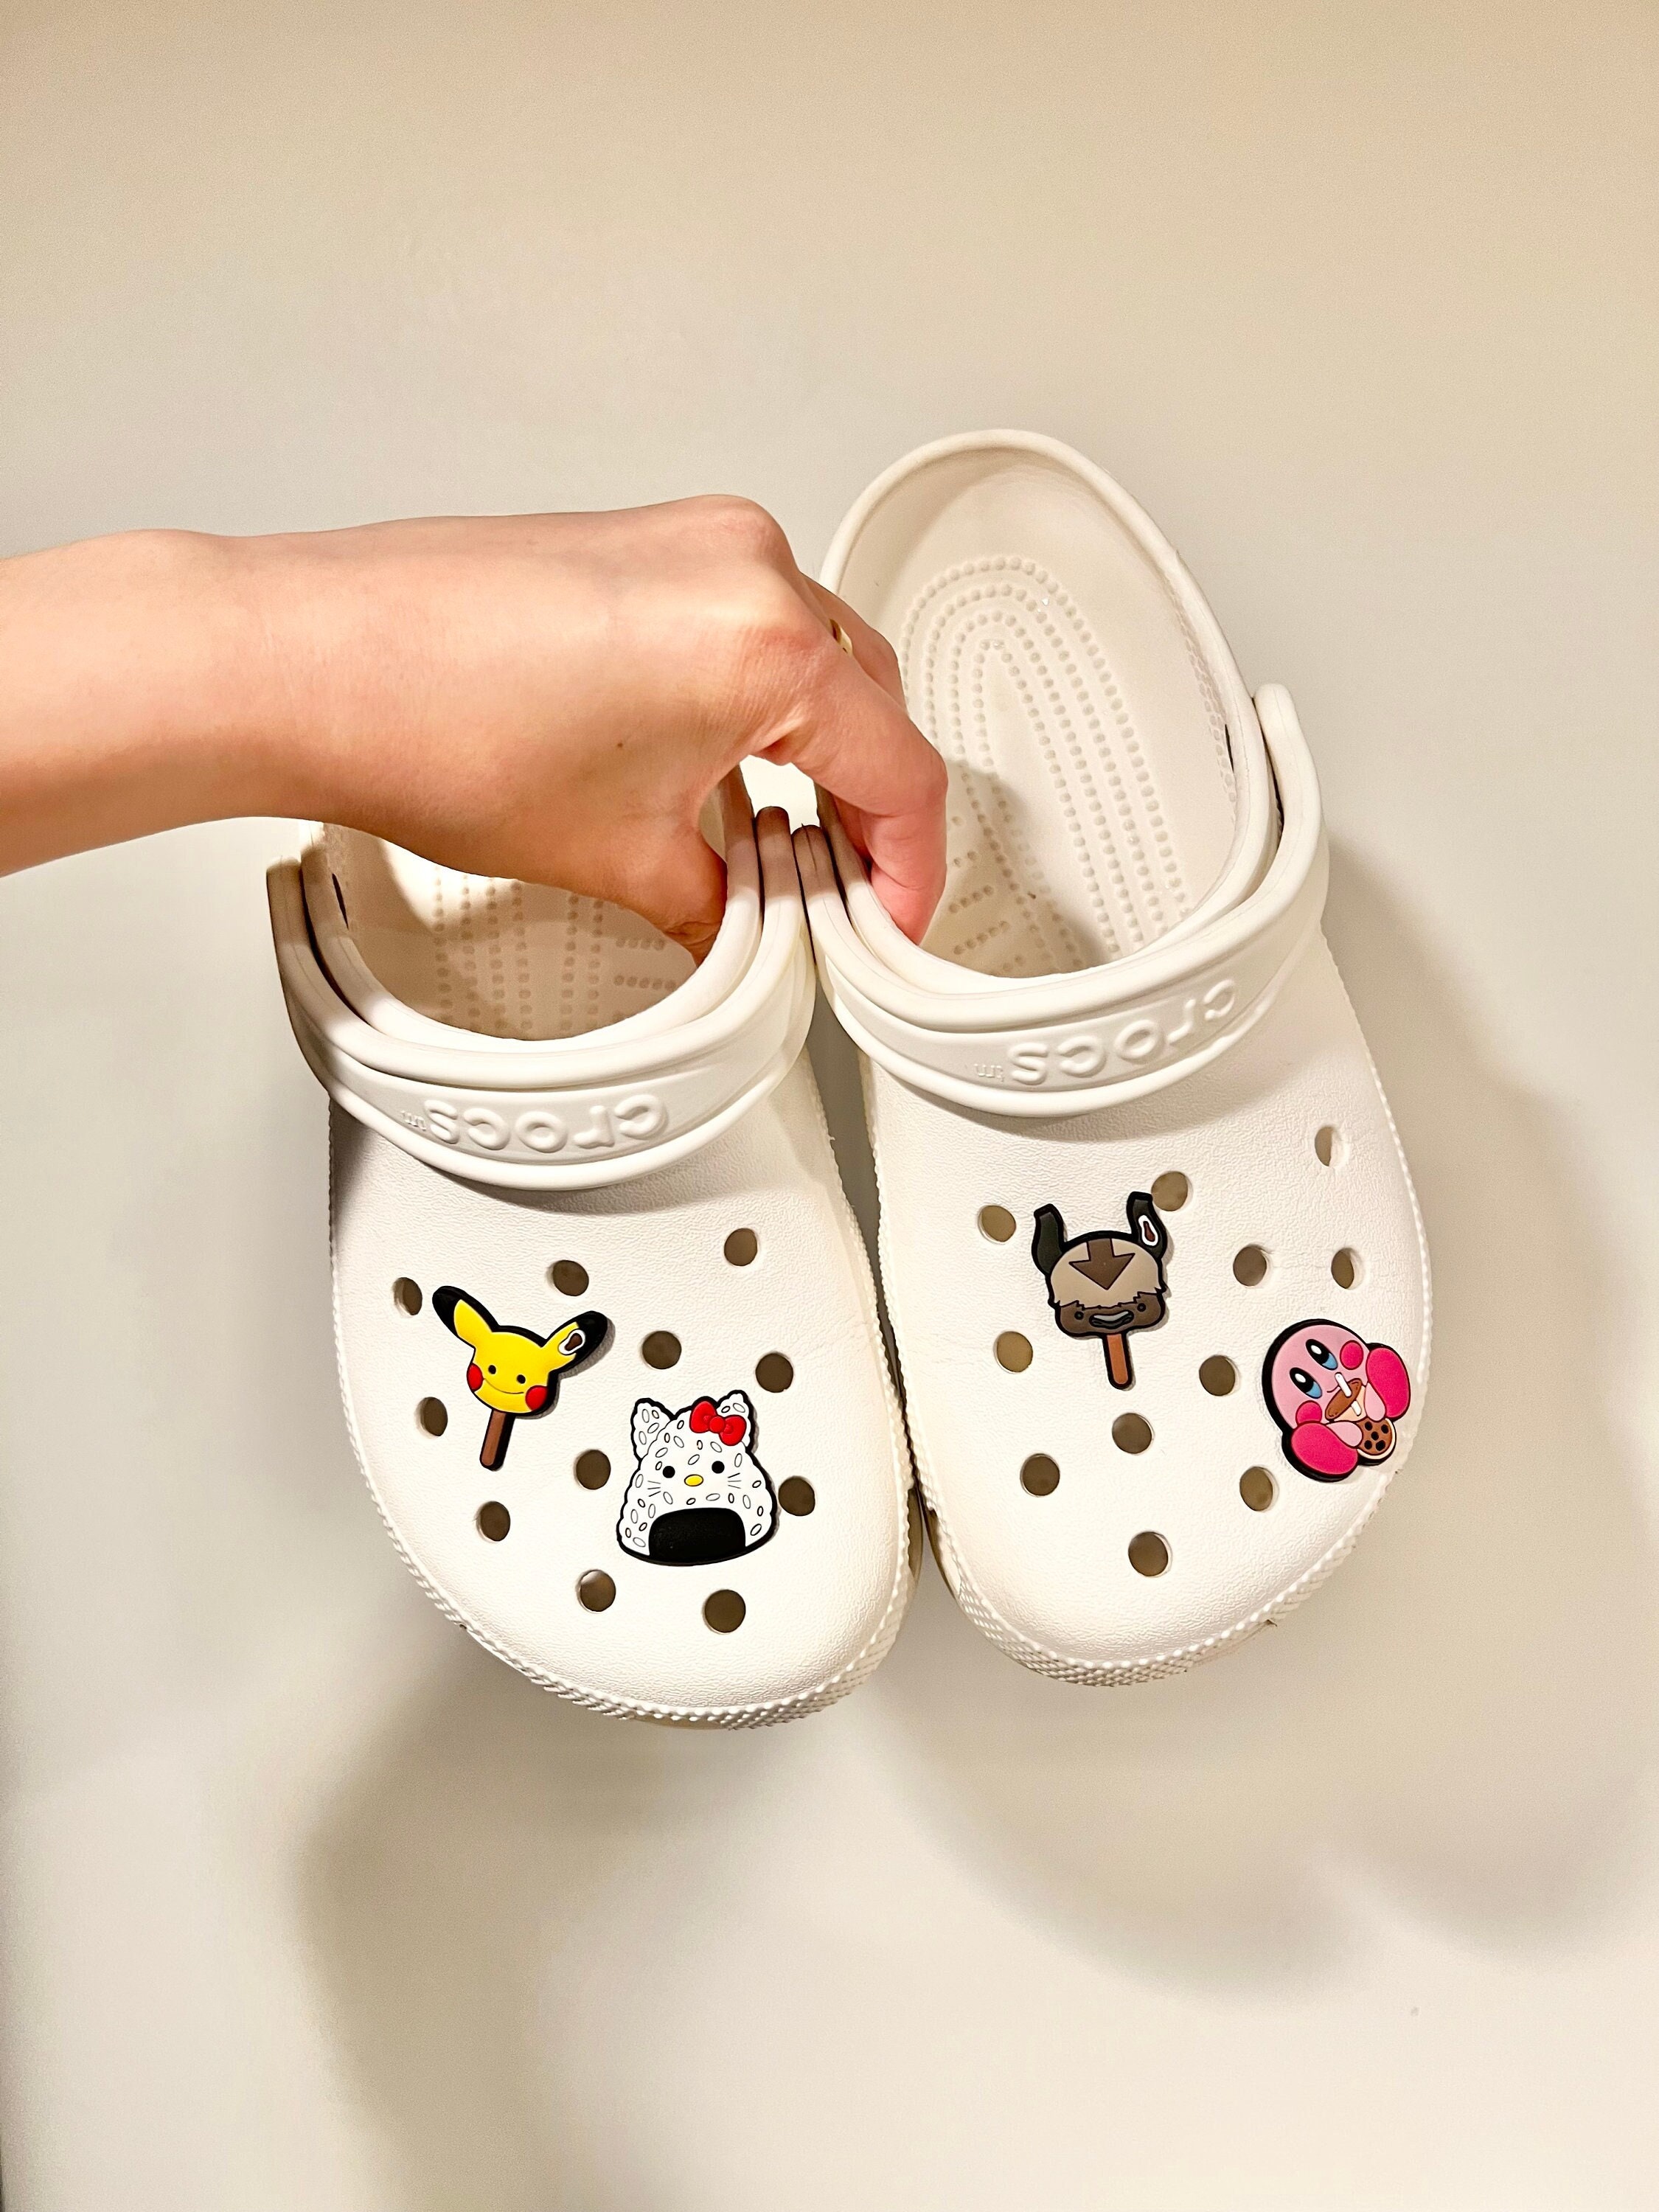 40Pcs Cute Kawaii Croc Charms accessories for Sandals